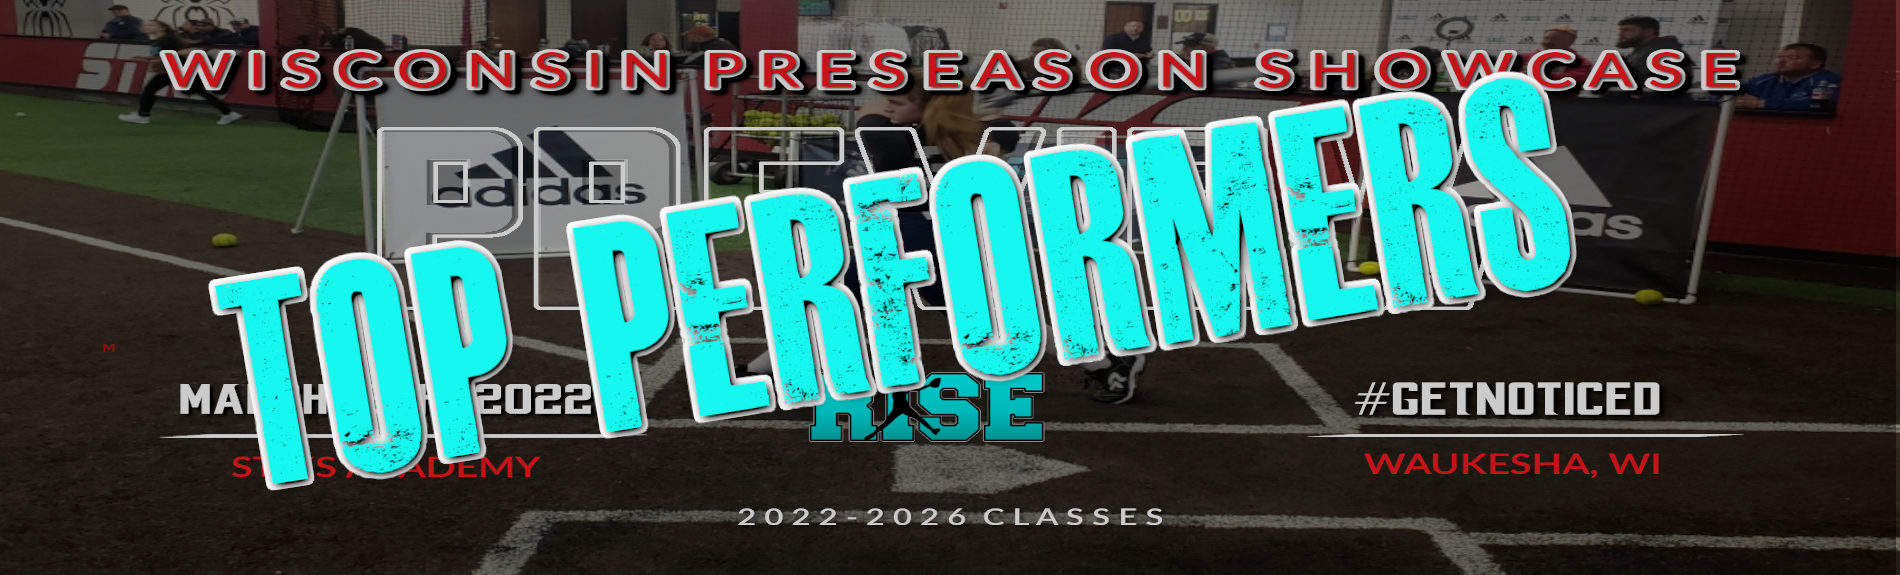 Wisconsin Preseason Preview “TOP PERFORMERS”